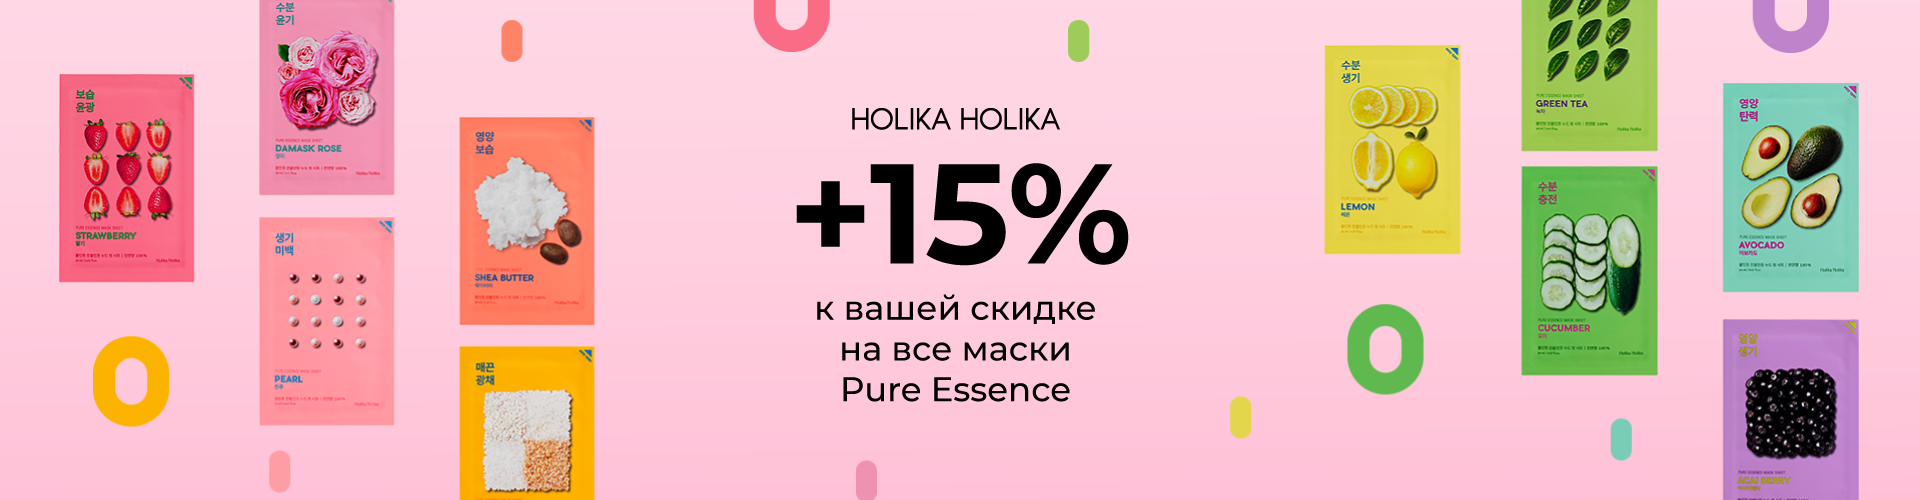 Тканевые маски для лица Holika Holika Pure Essence Mask со скидкой 15%